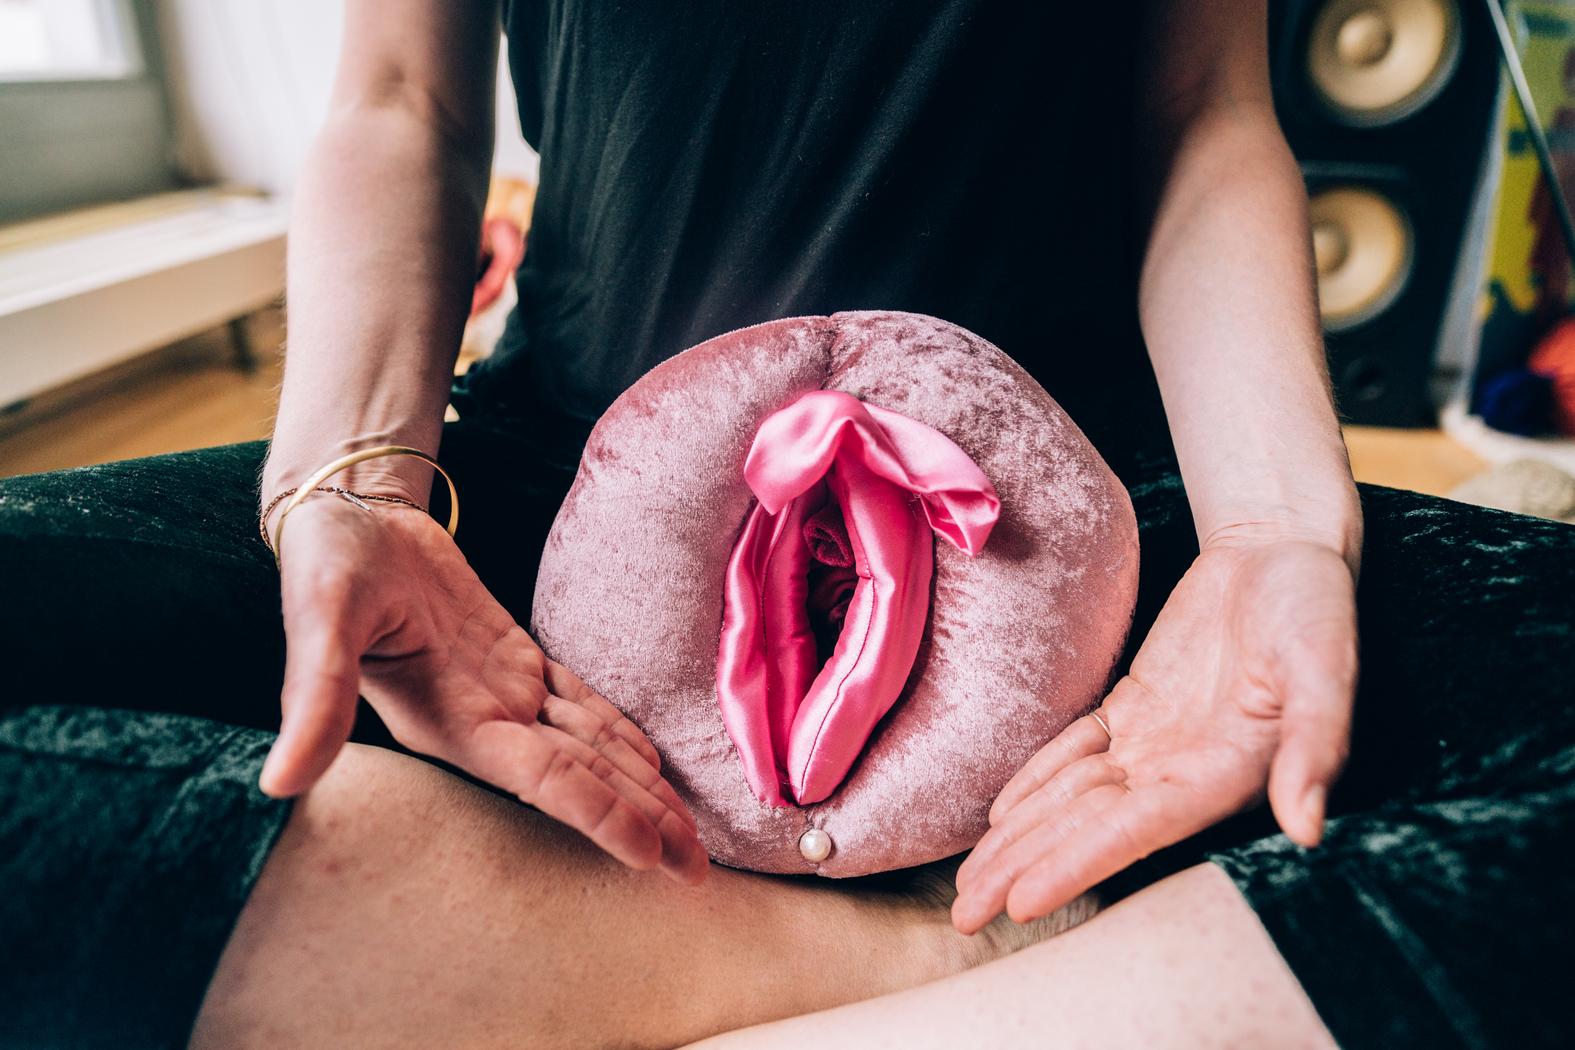 Porn Pussy Decorating - I Stared at Strangers' Vaginas at a Vulva Watching Workshop ...